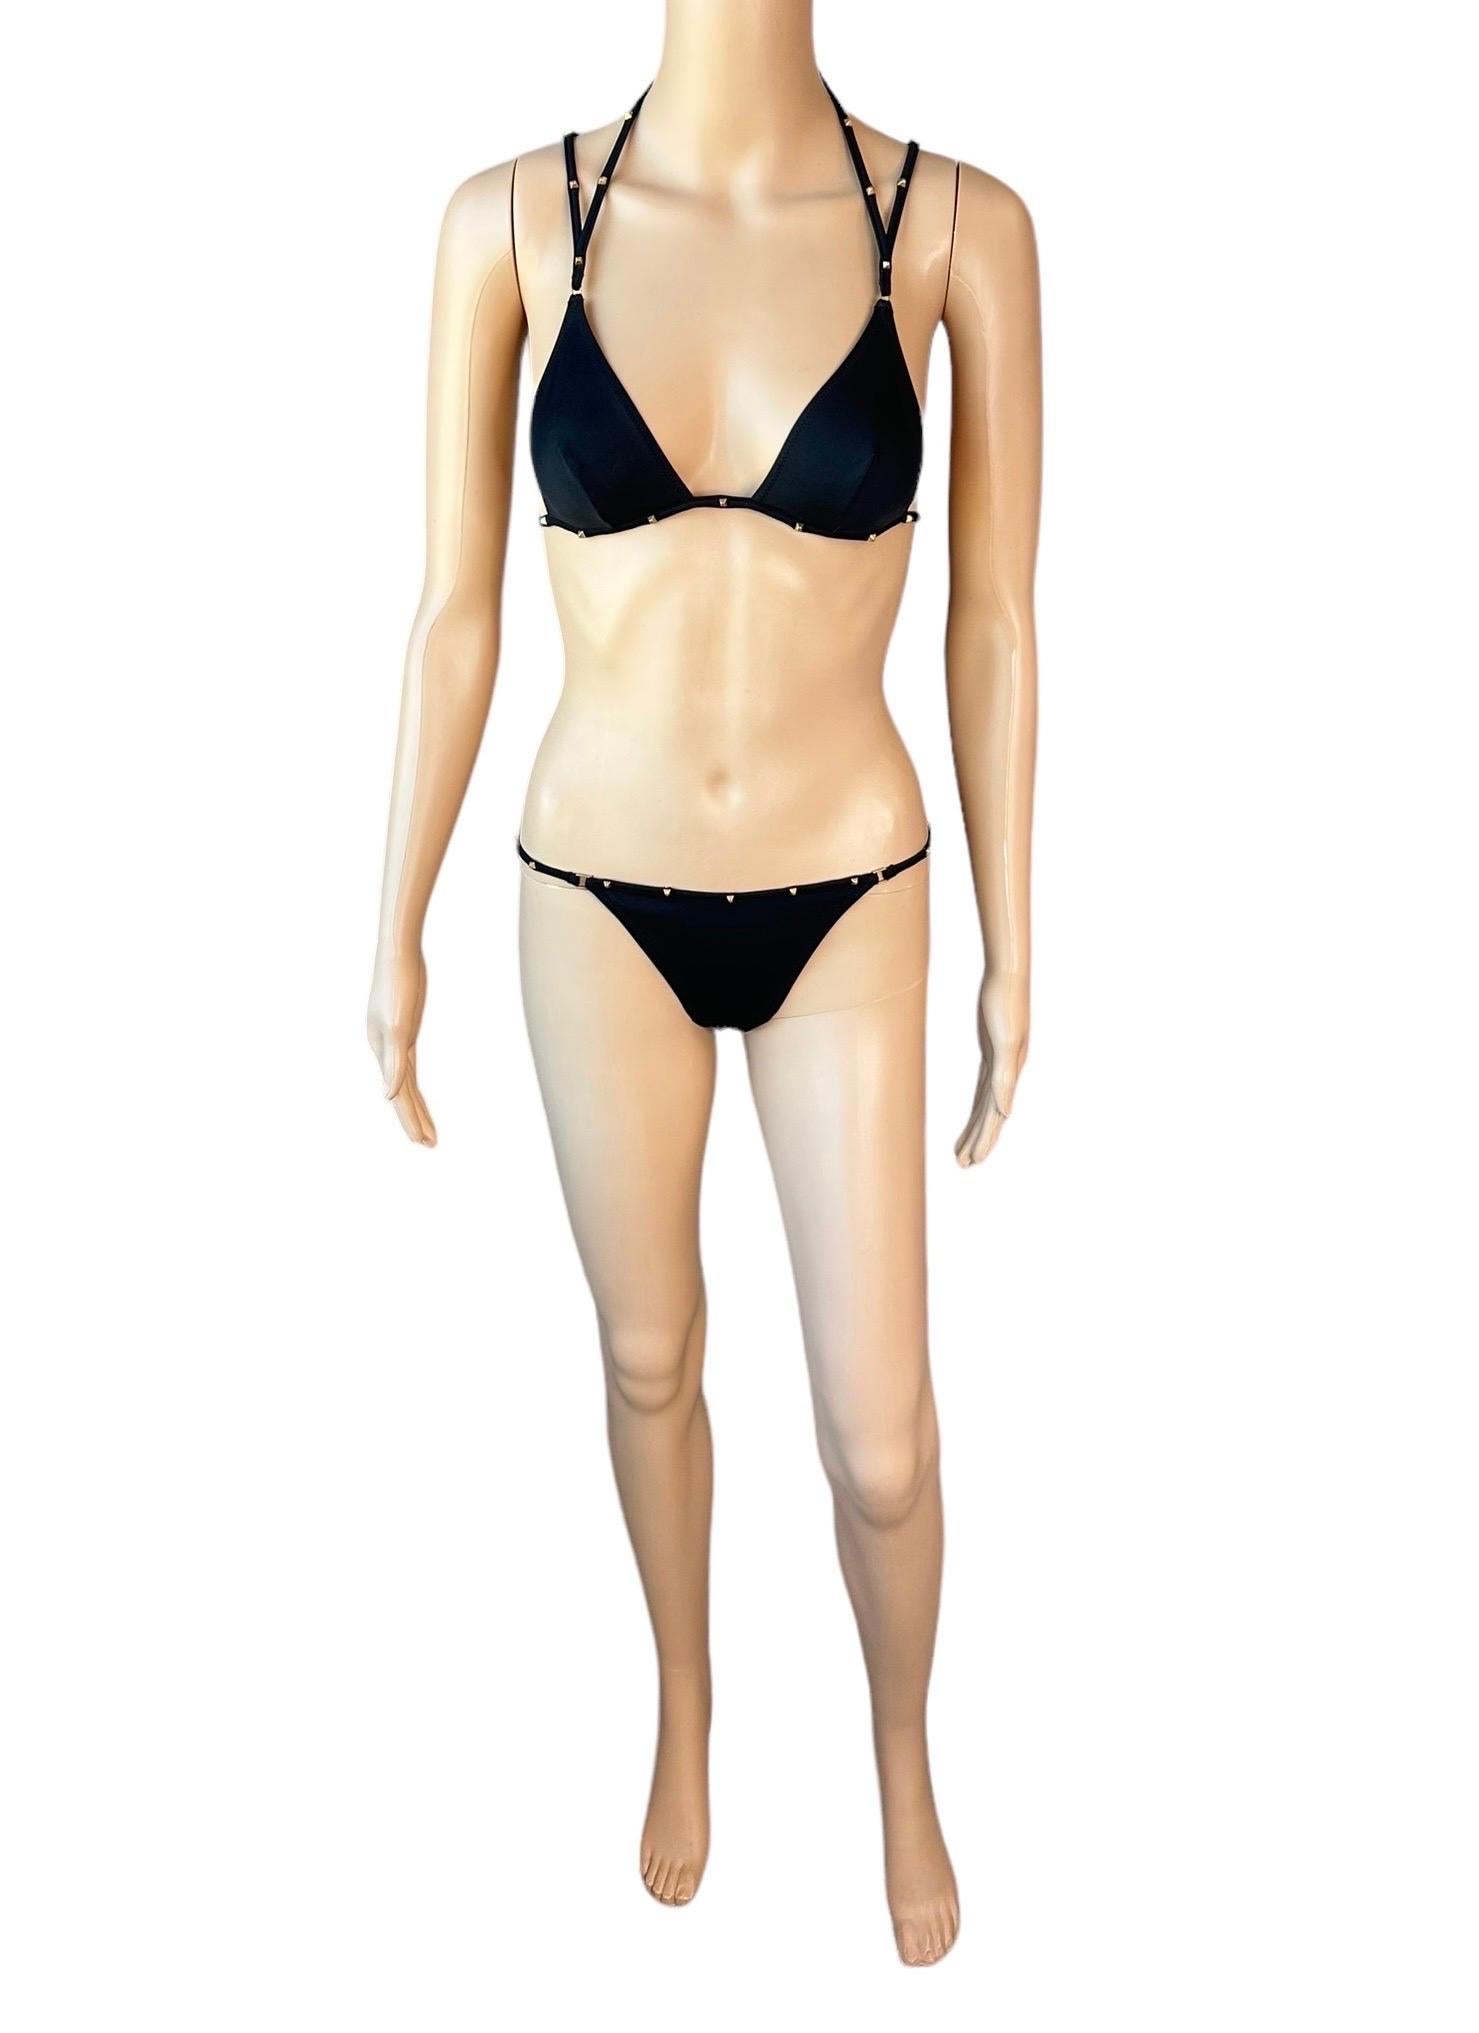 Tom Ford for Gucci F/W 2003 Bondage Studded Two-Piece Bikini Swimsuit Swimwear For Sale 5